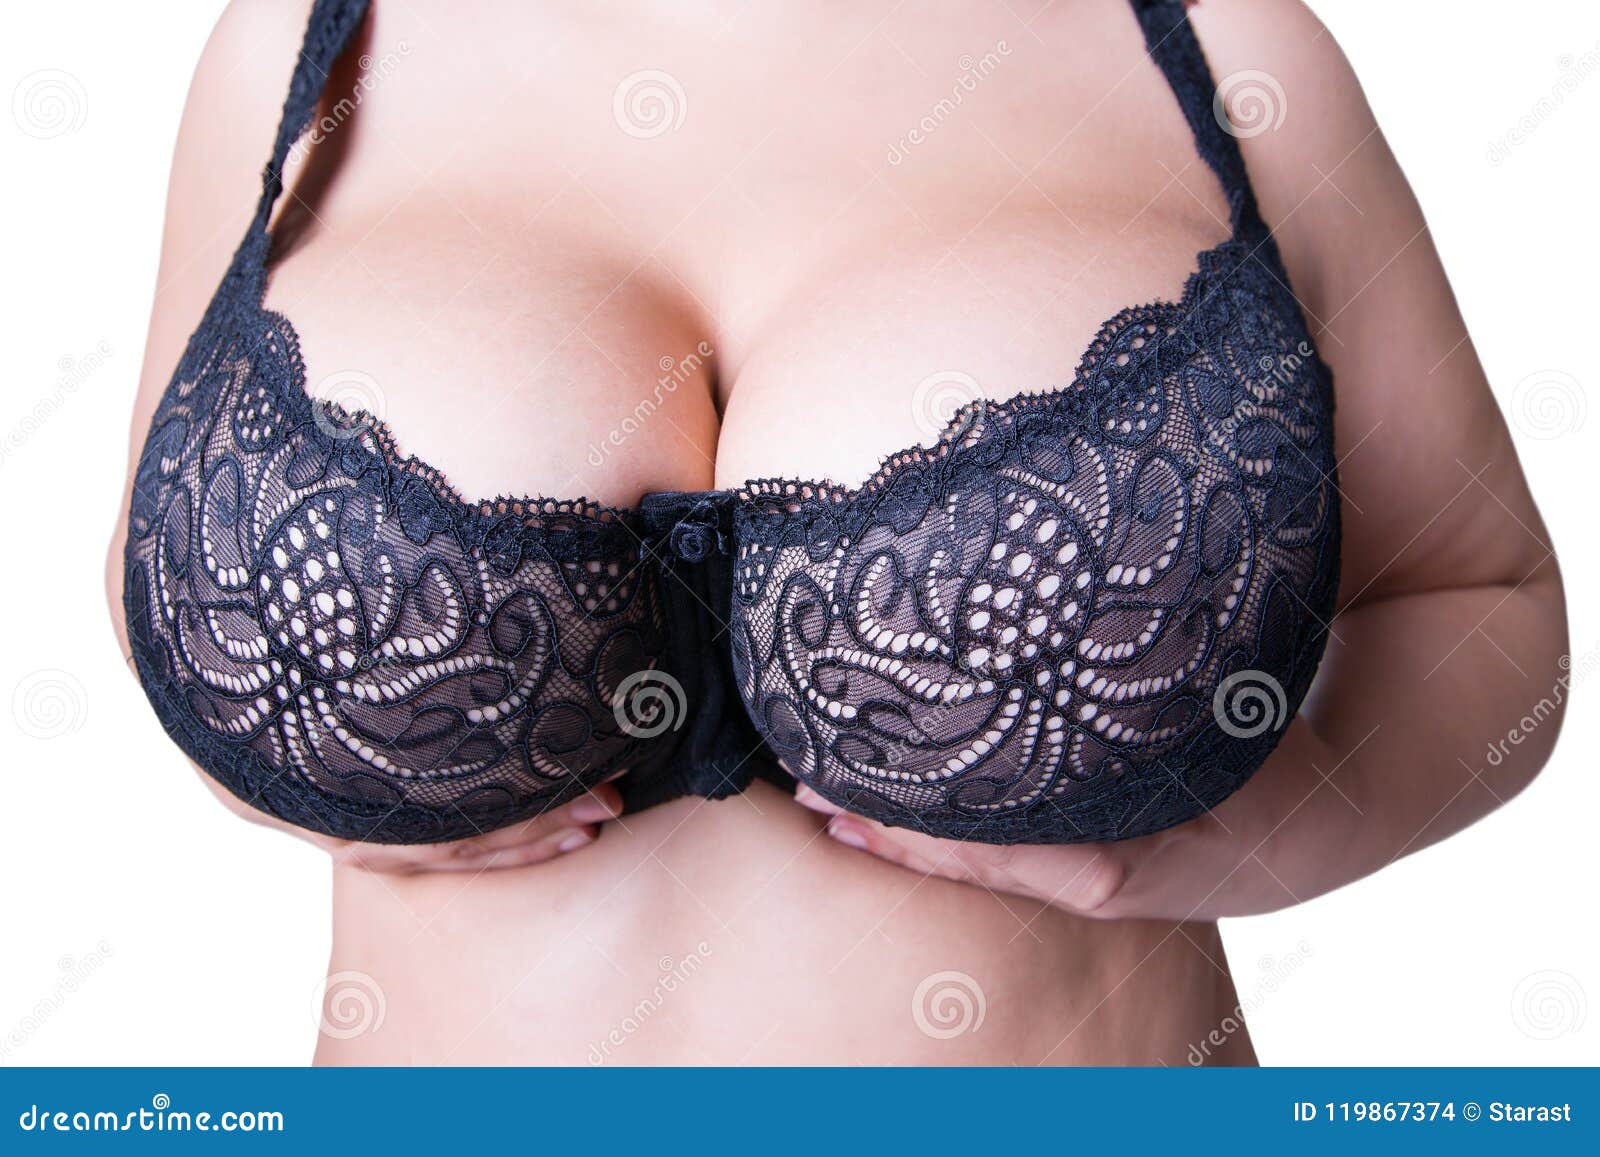 craig macphee add black sexy big tits photo